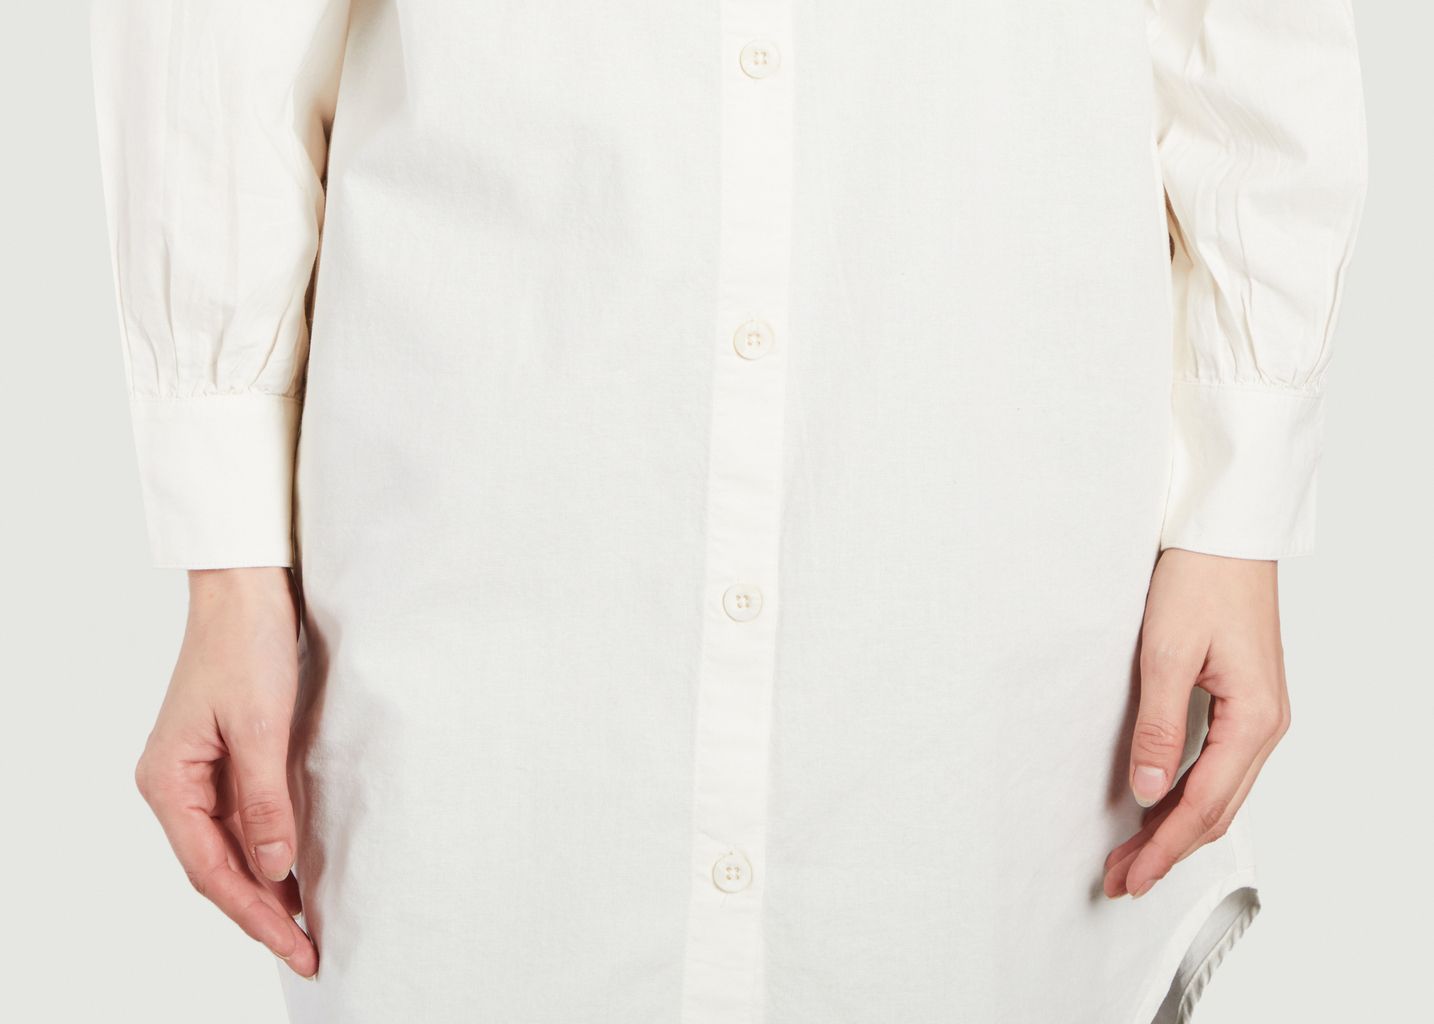 Ljunga off-white shirt - Dedicated Brand